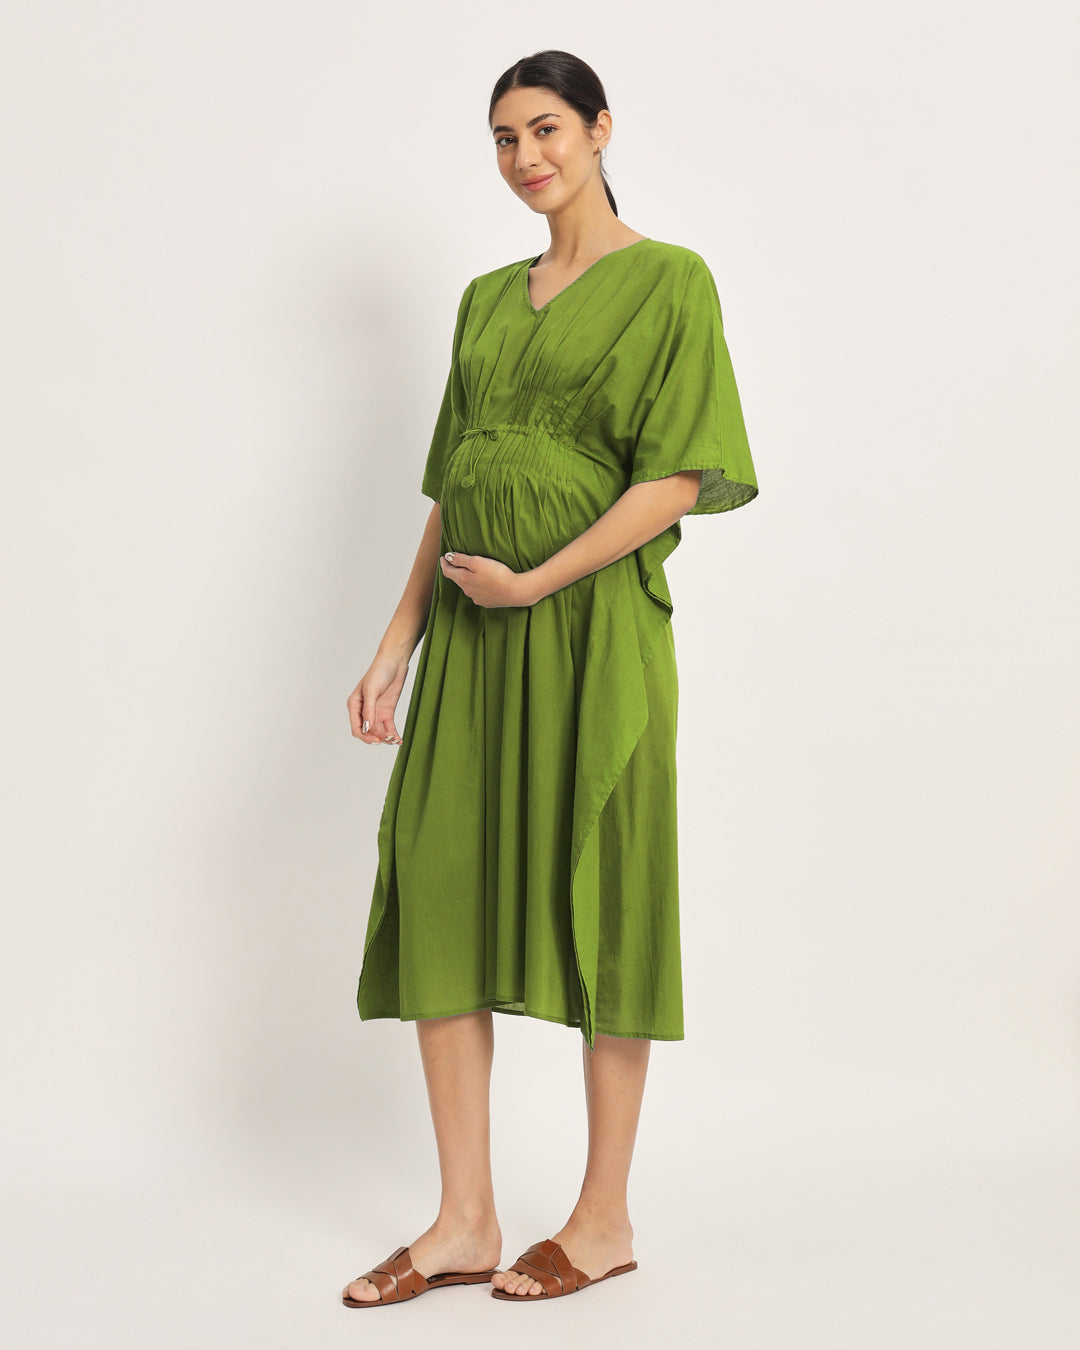 Combo: Russet Red & Sage Green Mommy Mode Maternity & Nursing Dress